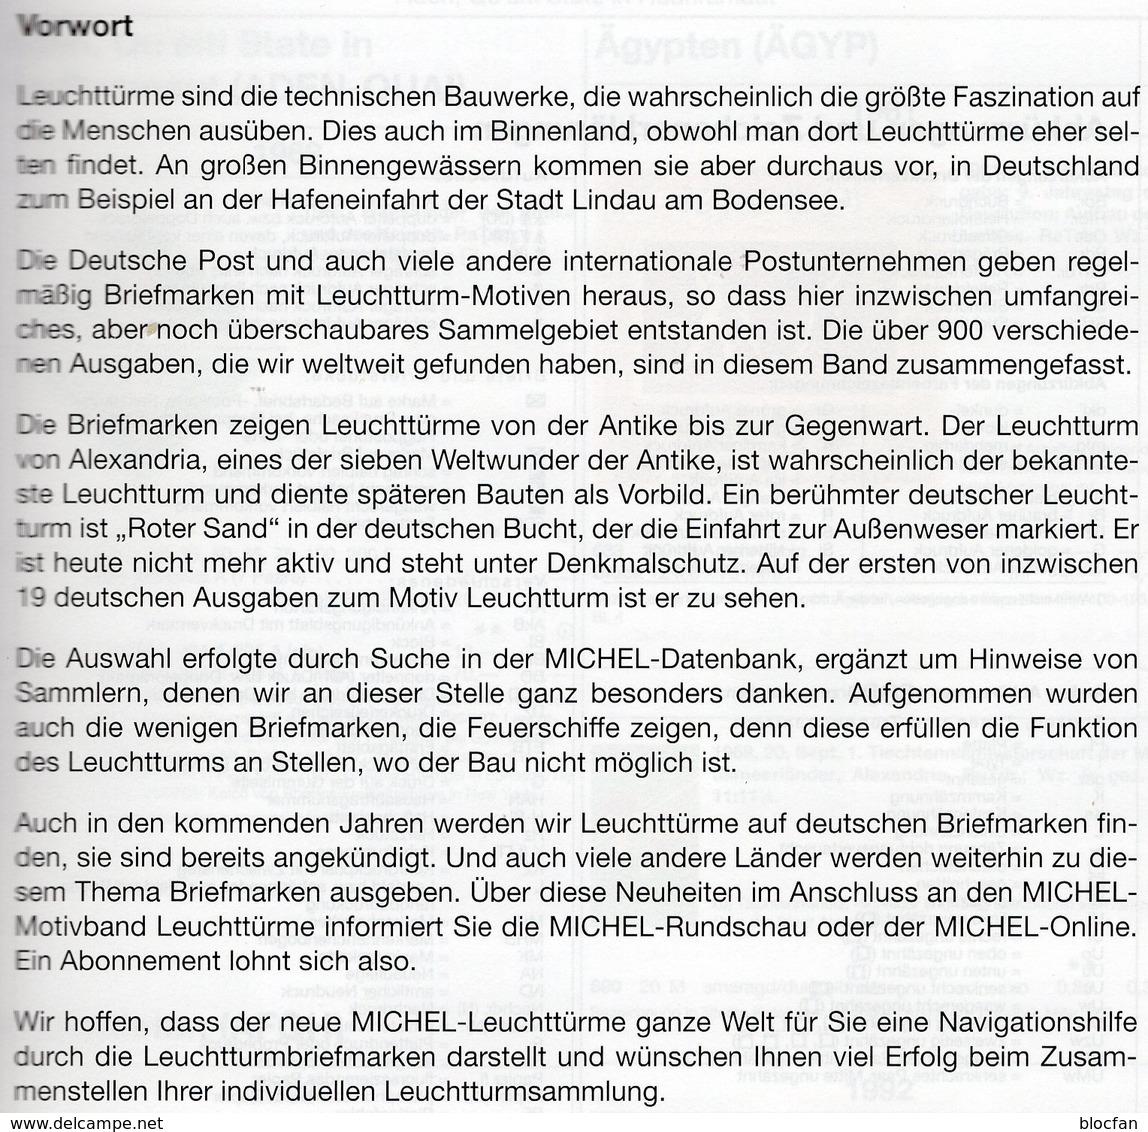 MICHEL Erstauflage Motiv Leuchtturm 2017 New 64€ Topics Stamps Catalogue Lighthous The World ISBN 978-3-95402-163-5 - Philately